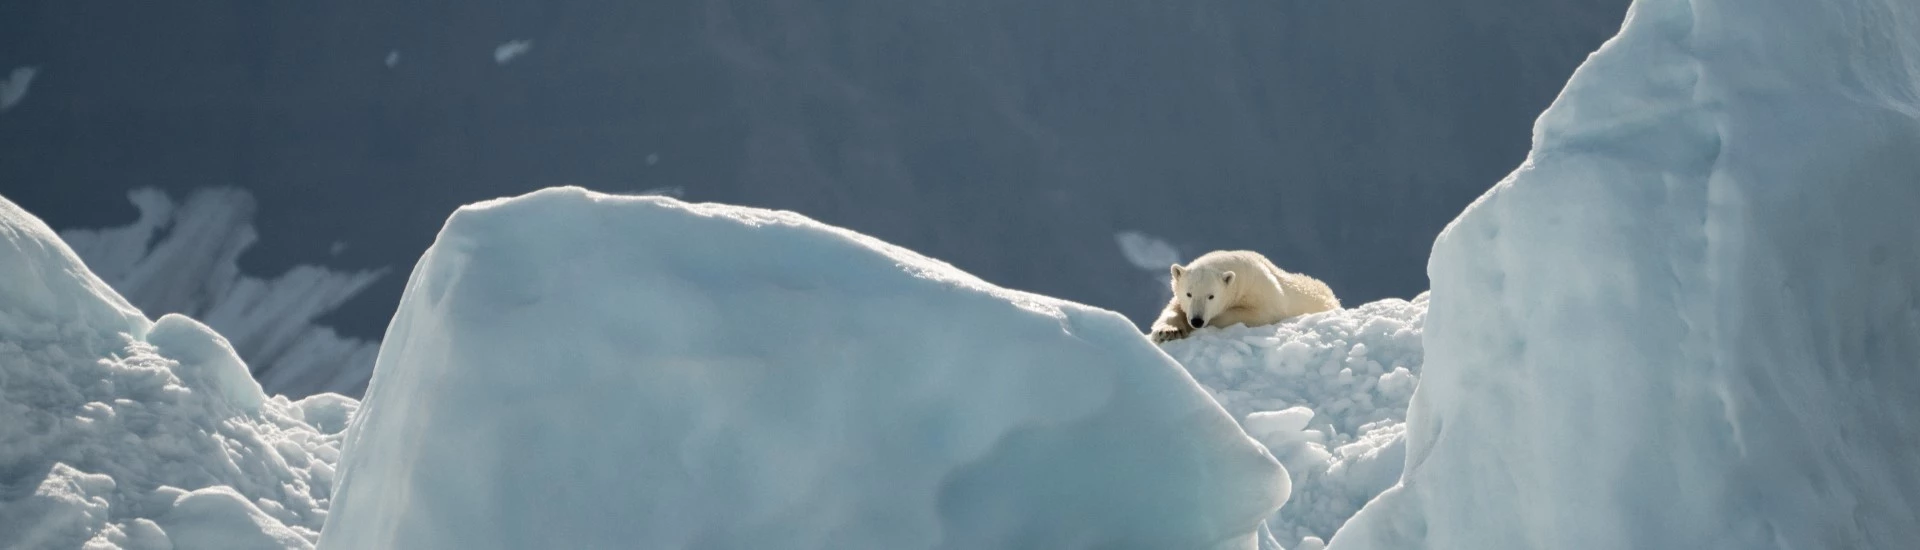 Arctic - Polar bear lying on glacier